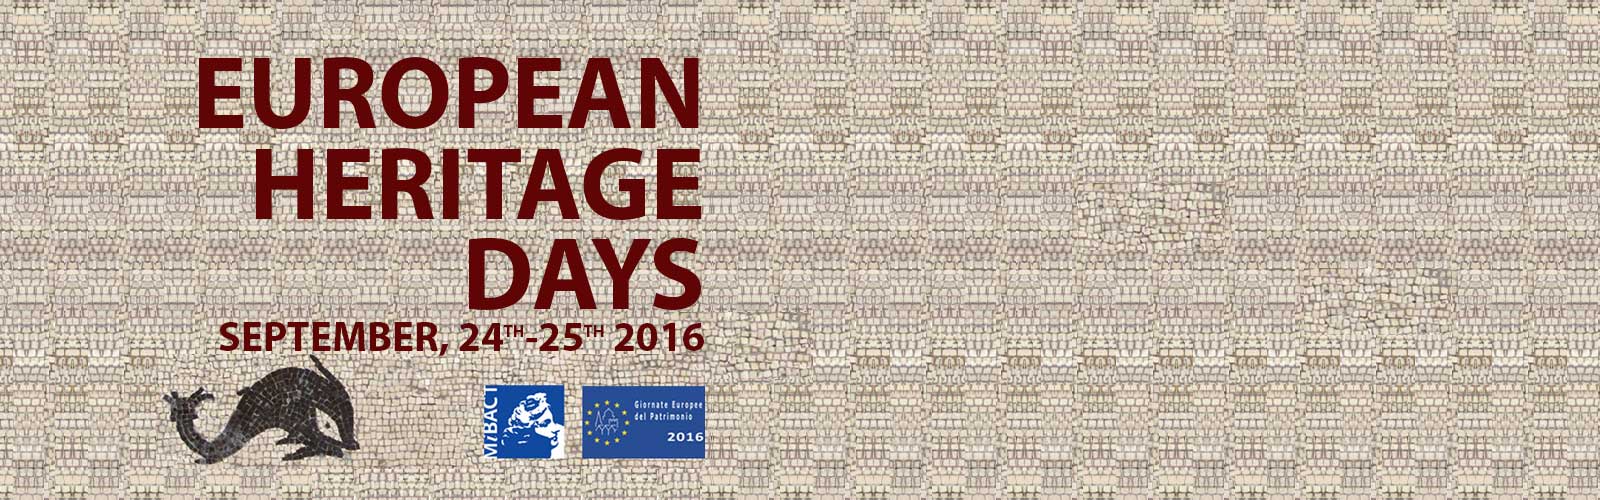 European Heritage Days 2016